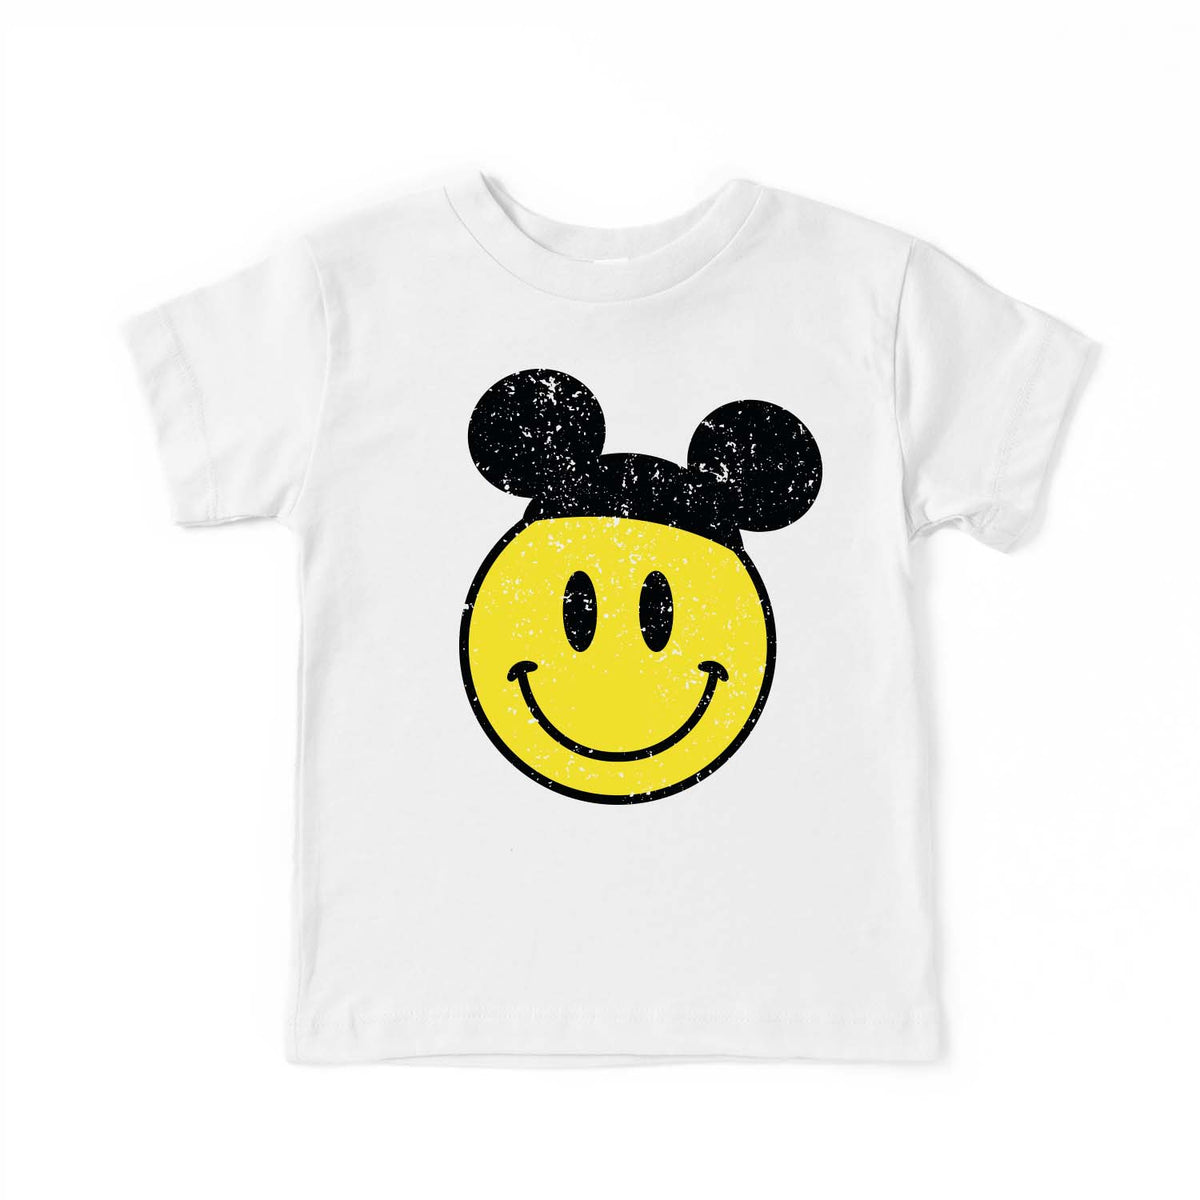 Smiley Face in Mickey Ears Tee, Kids Size